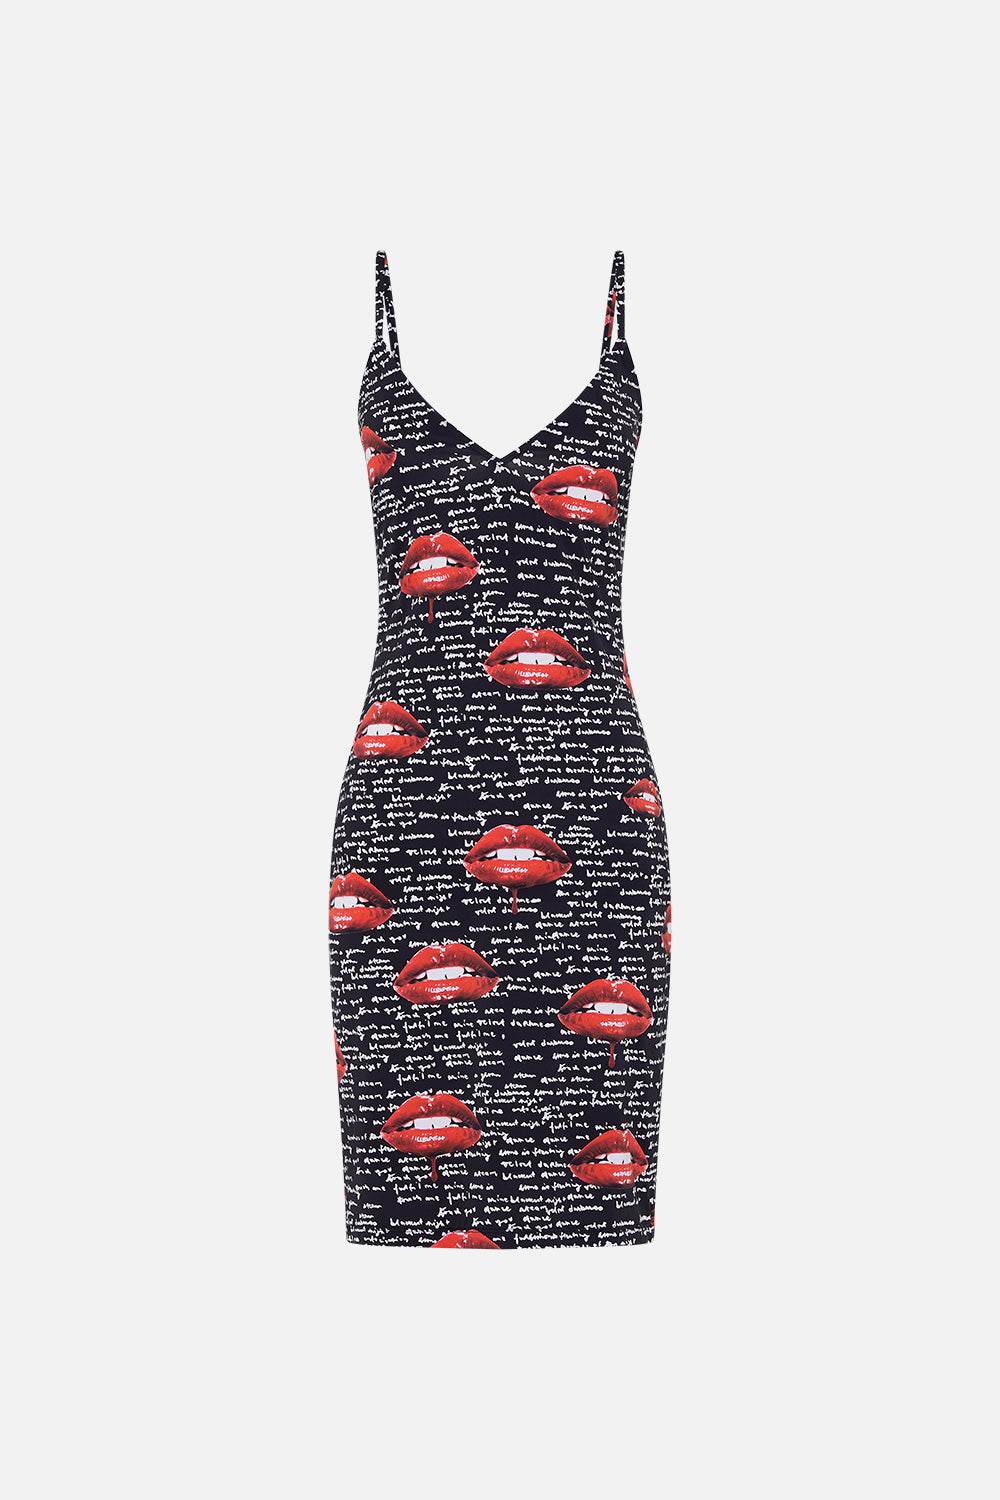 Product view of CAMILLA black slip dress in Chaos Magic print 